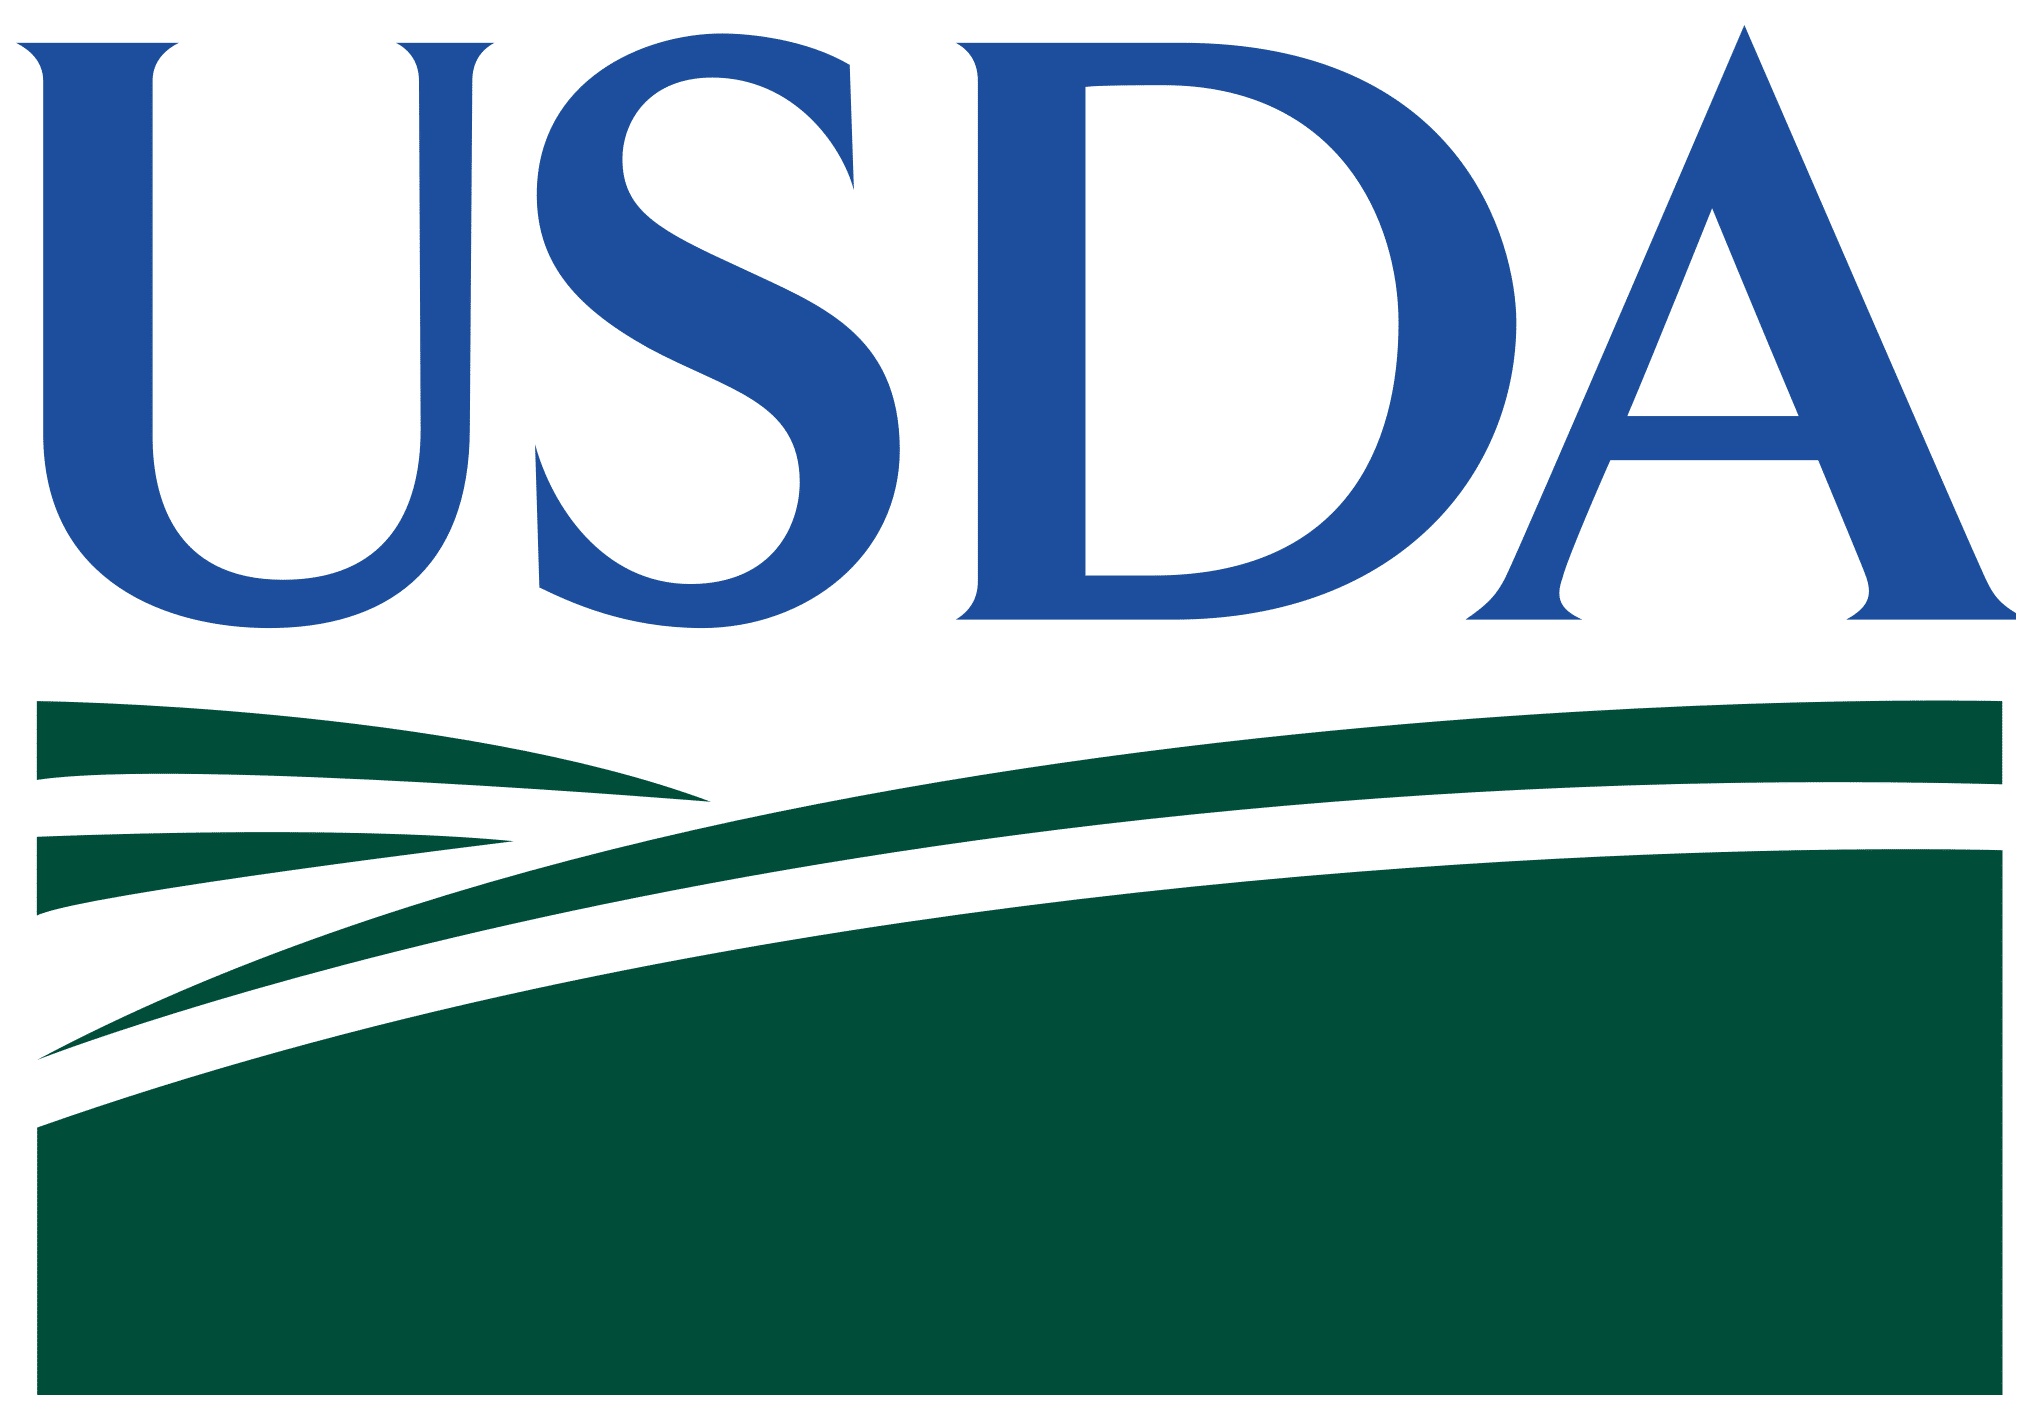 U.S. Department of Agriculture